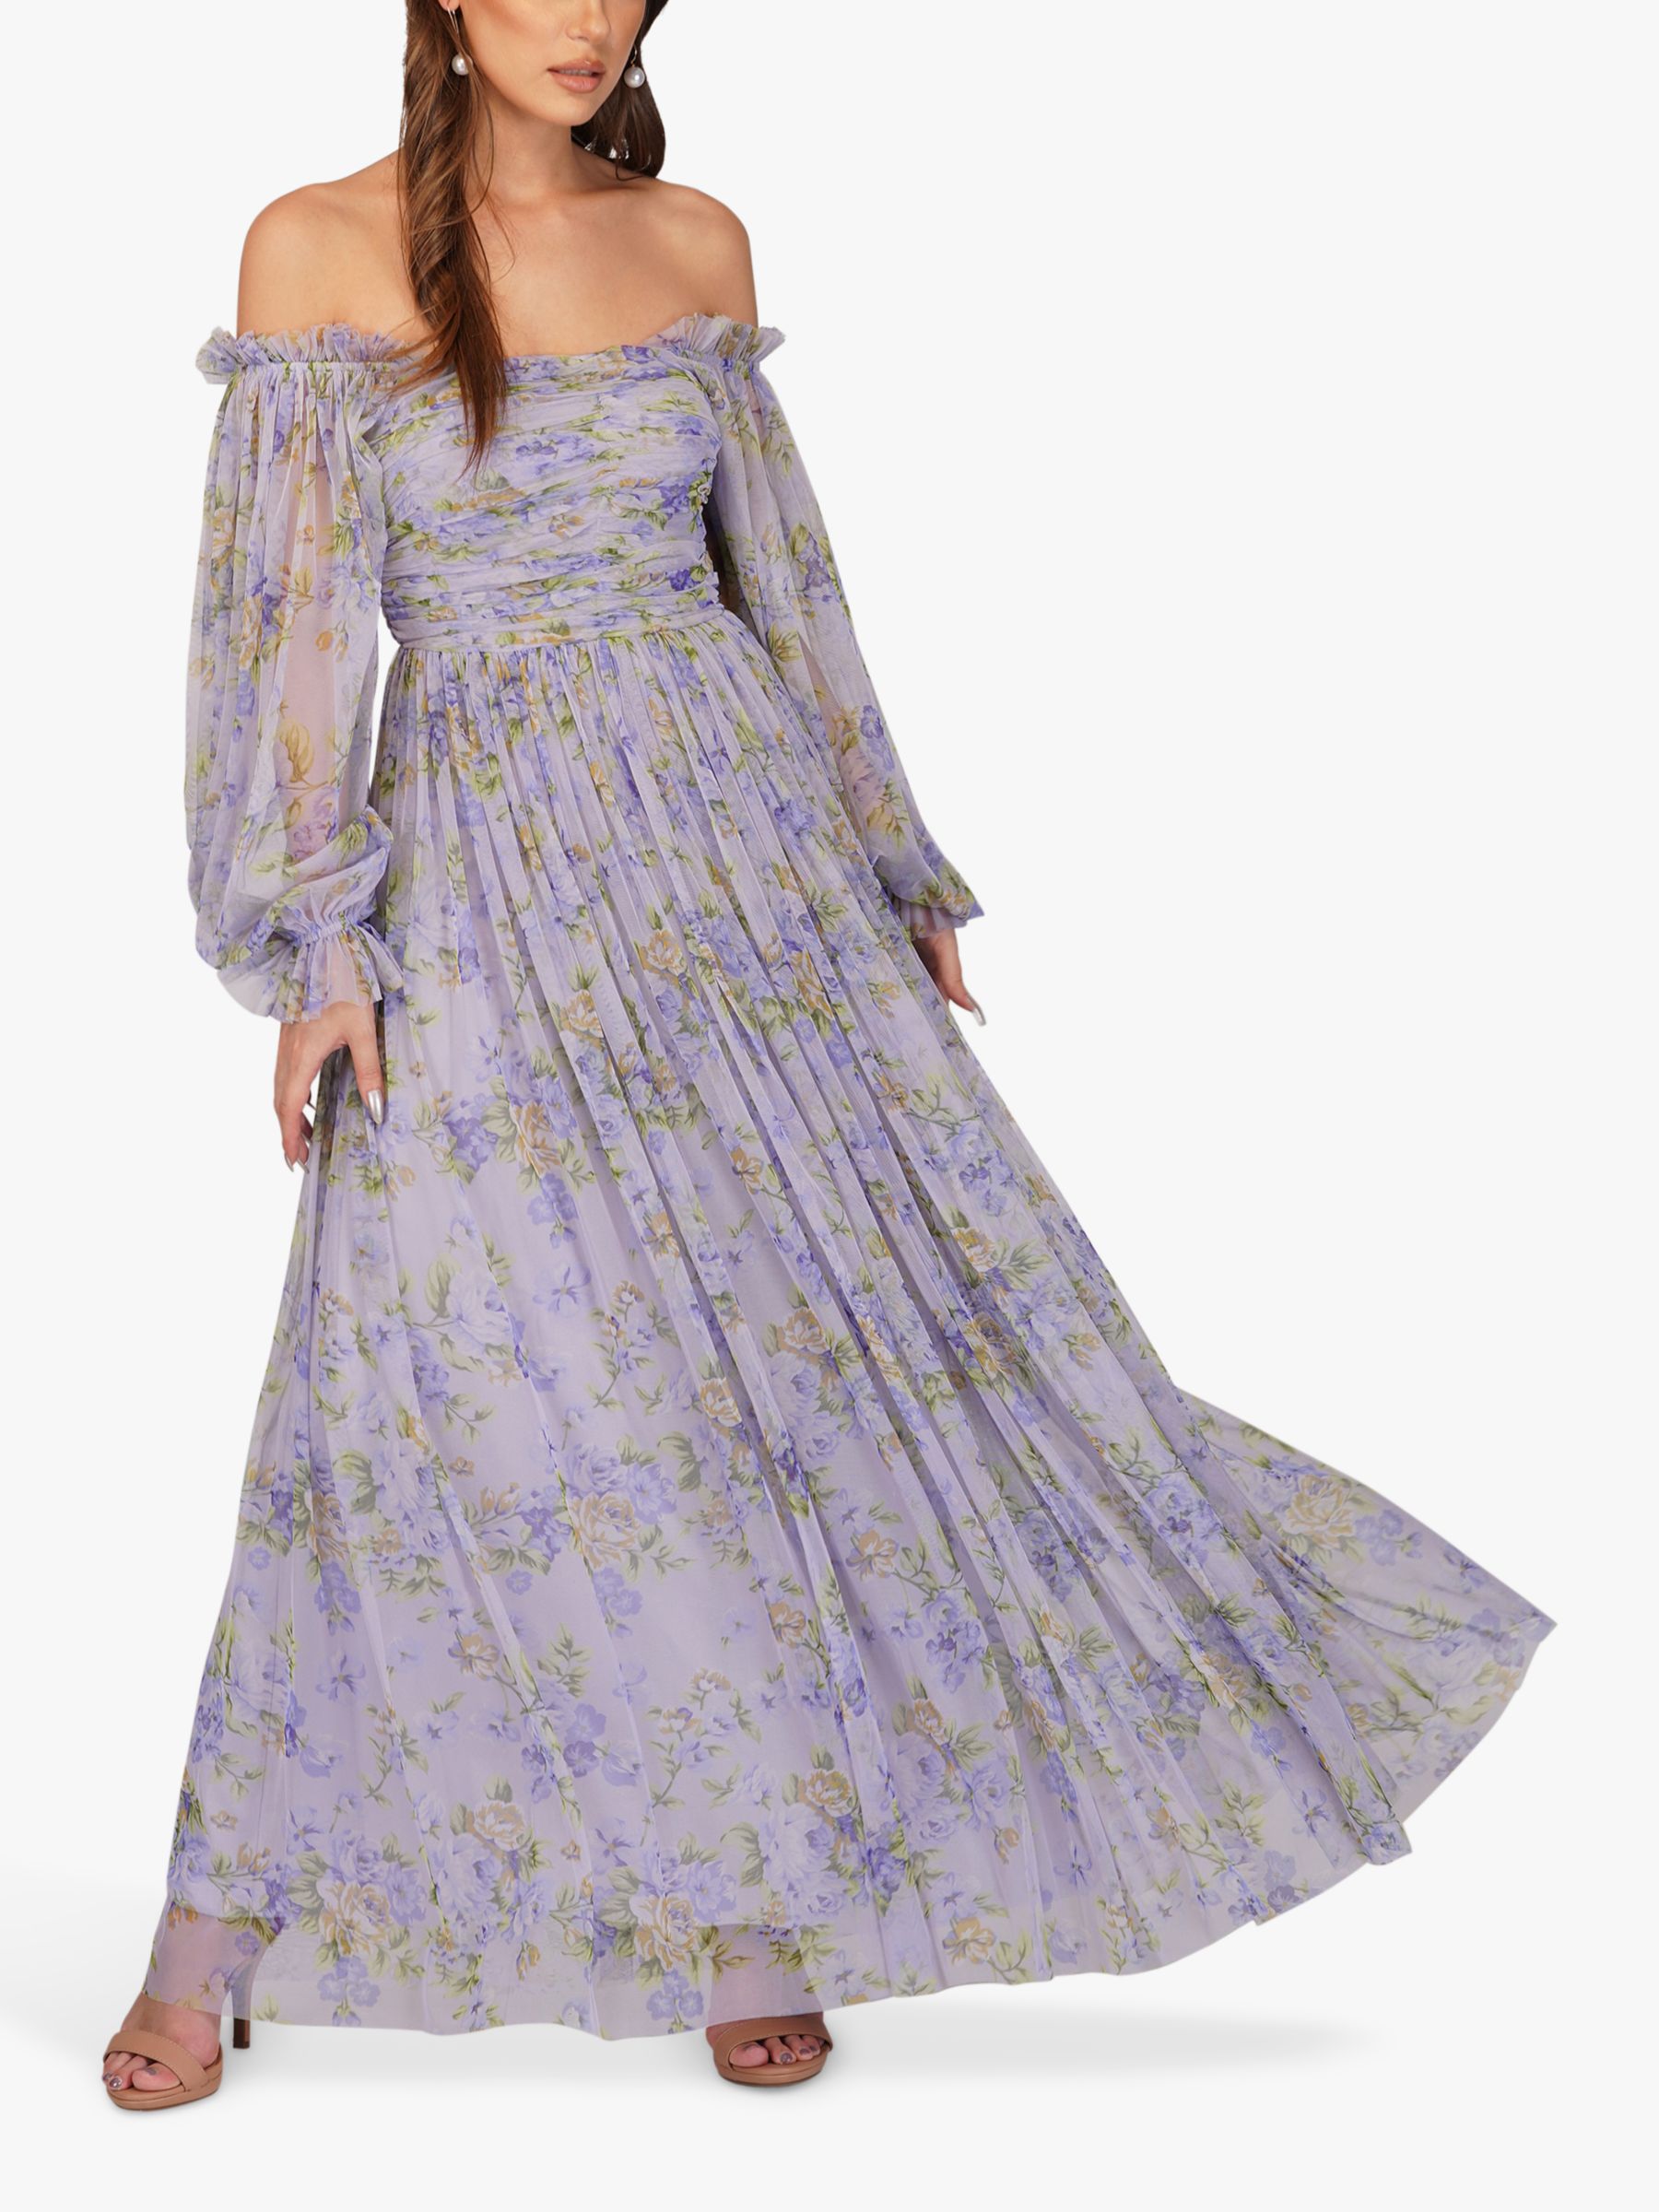 Lace & Beads Lana Ruched Bodice Maxi Dress, Lilac, 8